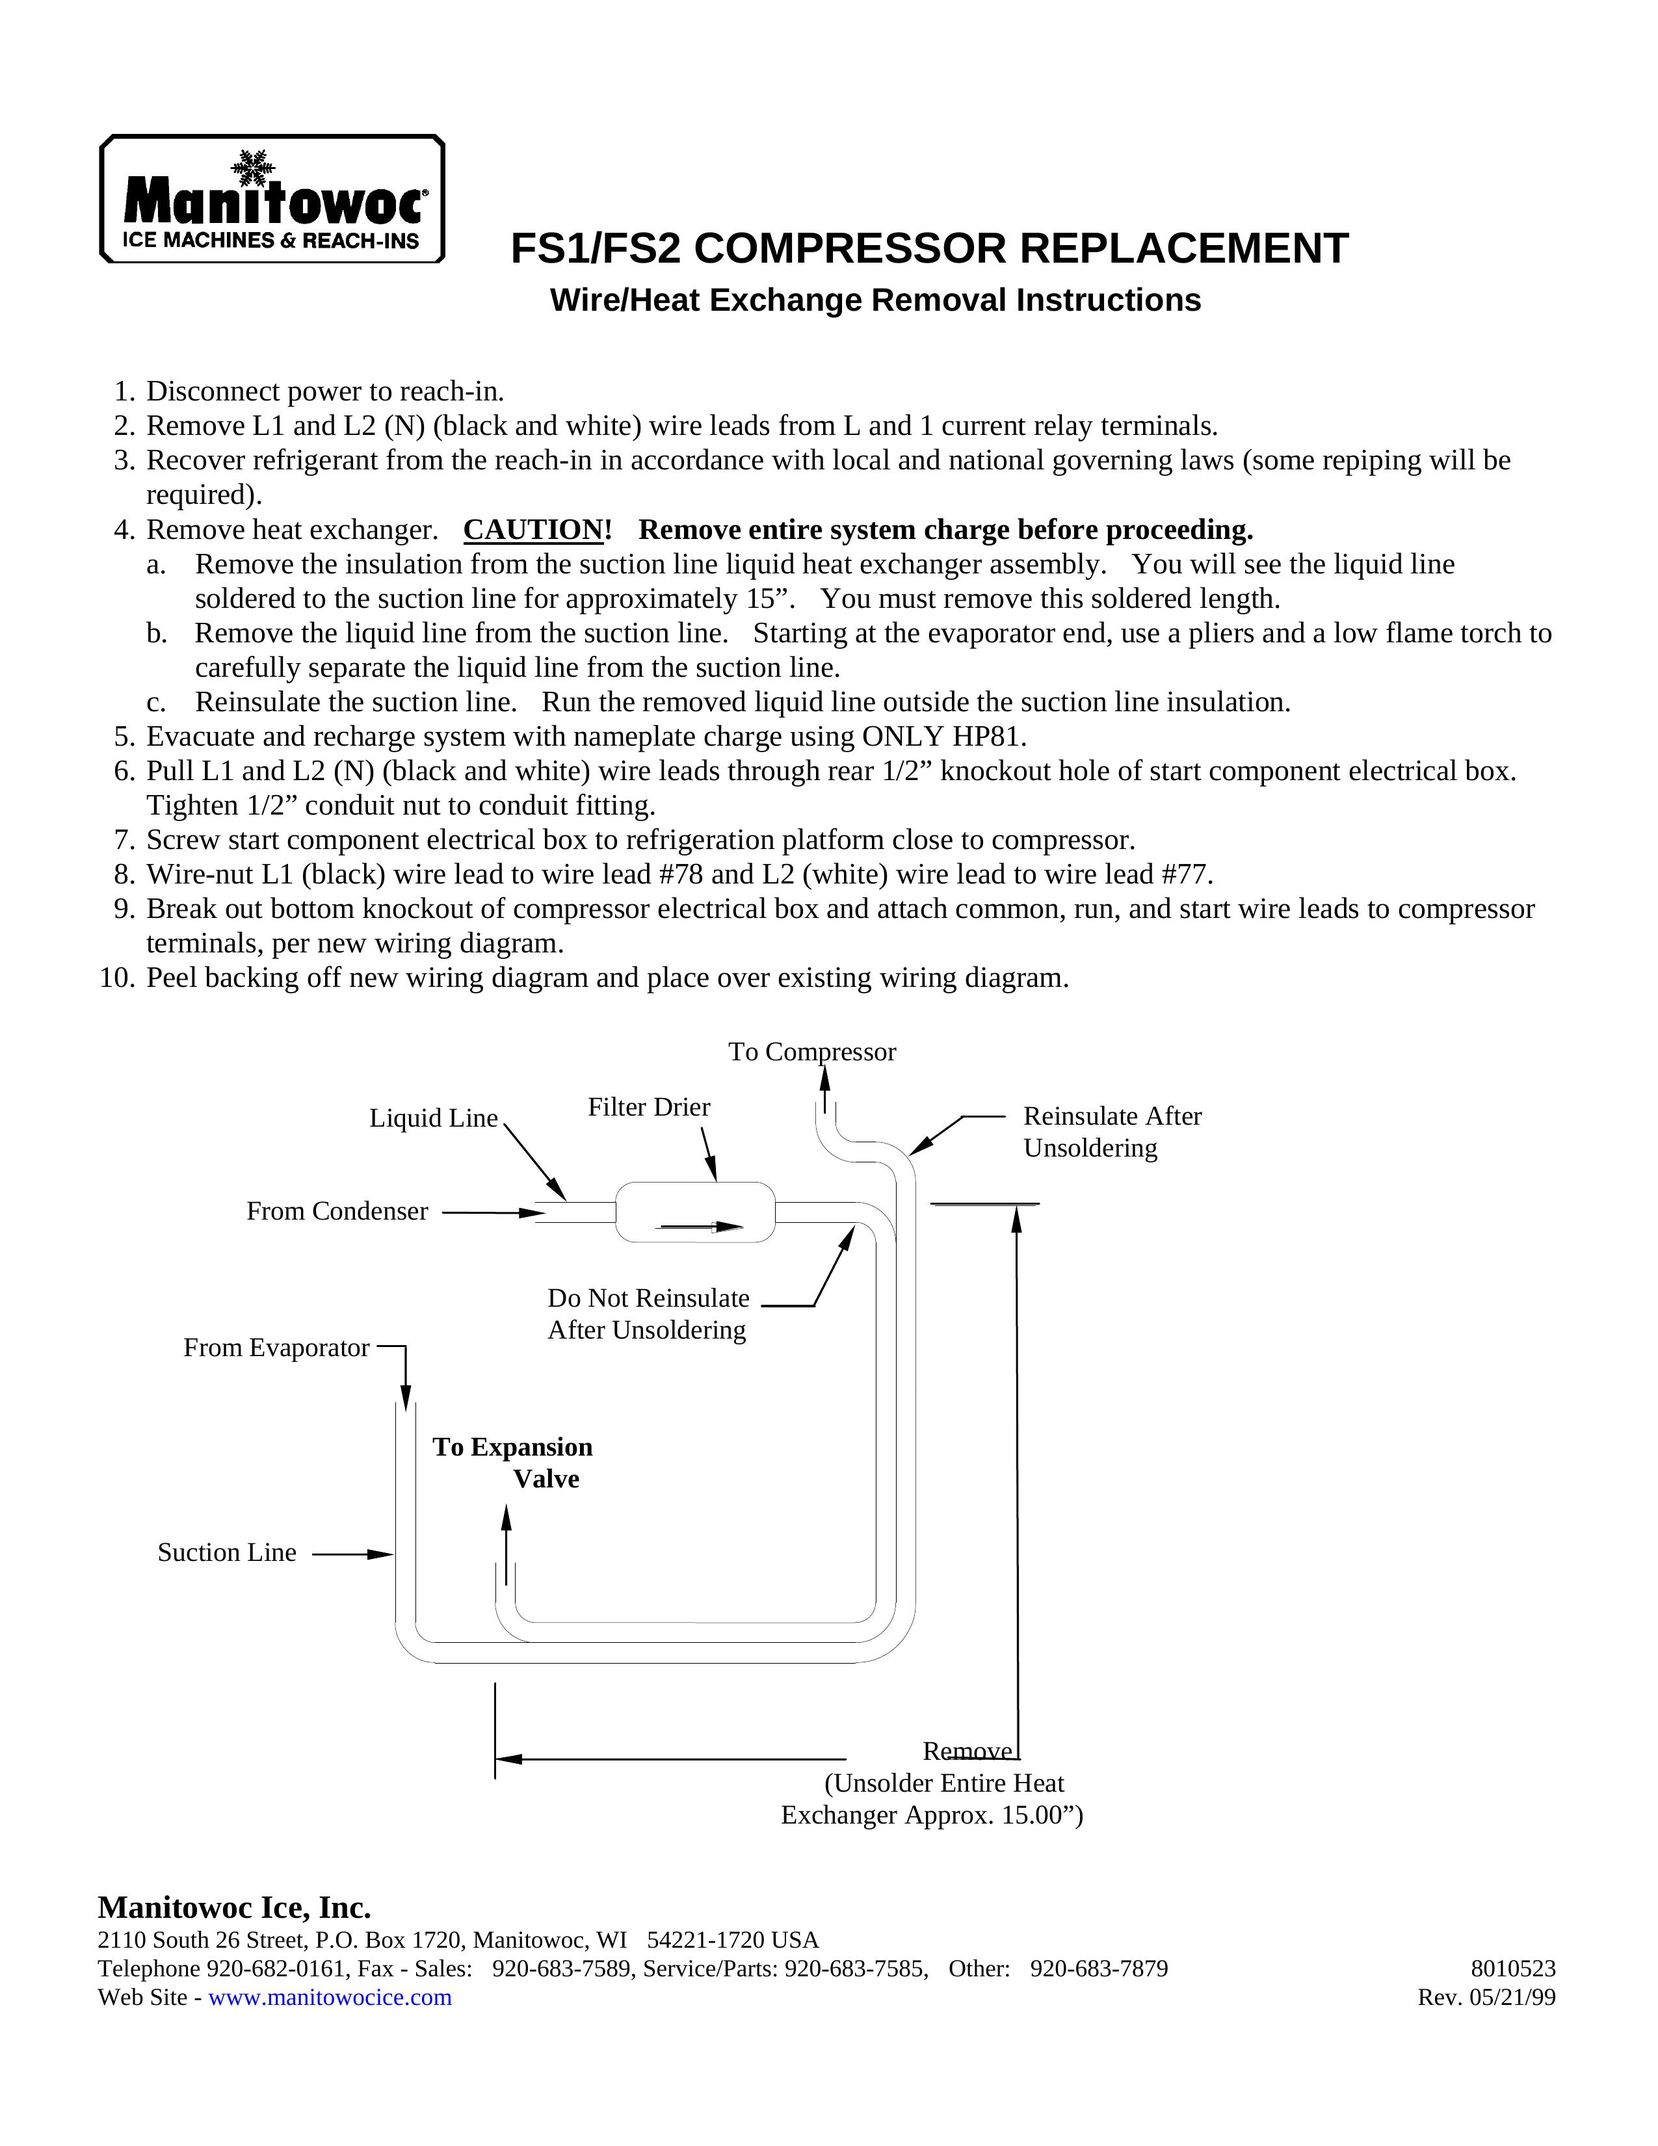 Manitowoc Ice FS1 Air Compressor User Manual